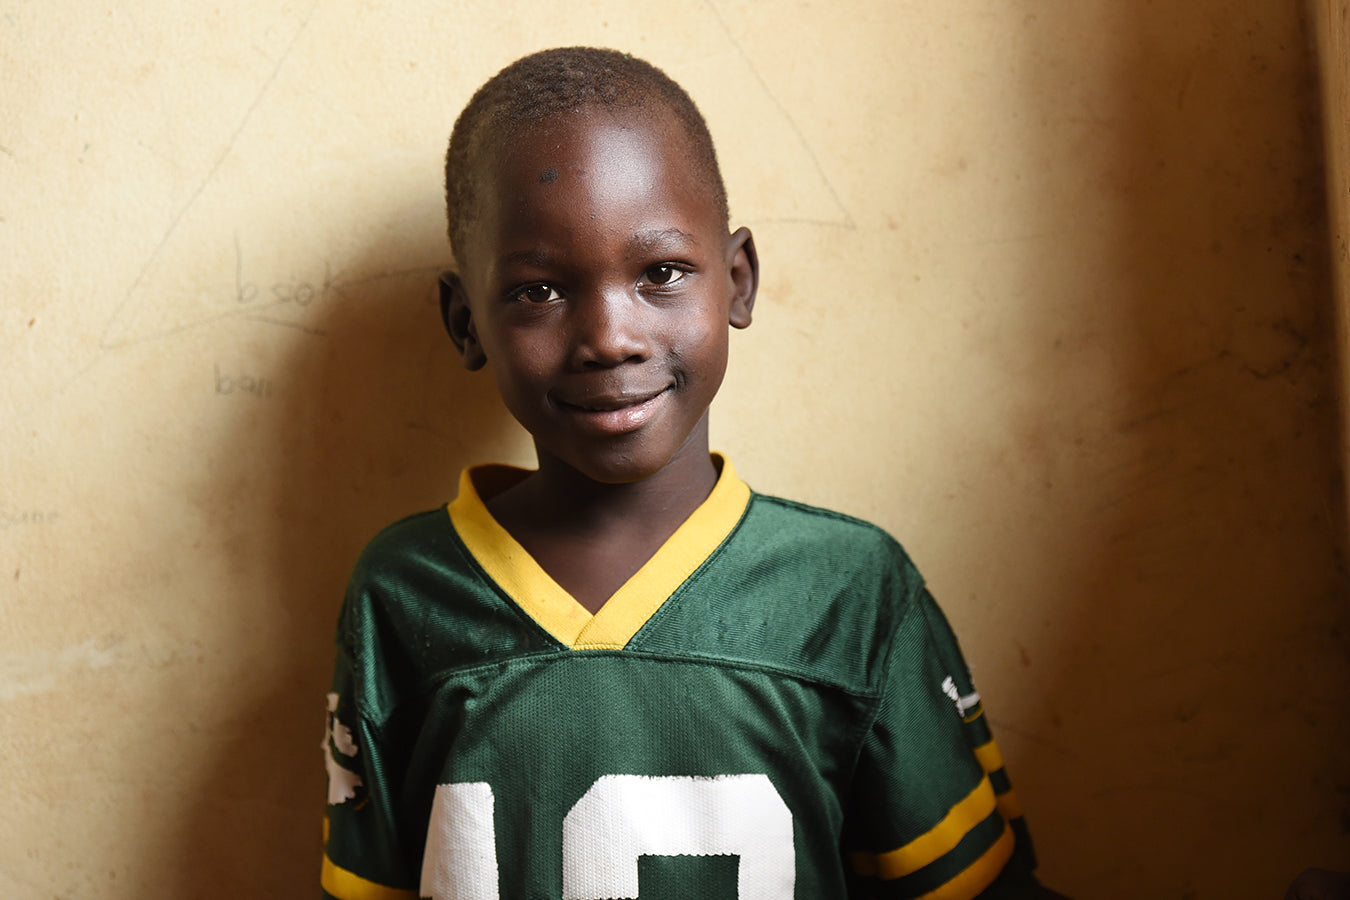 Smiling Ugandan boy wearing a green football jersey